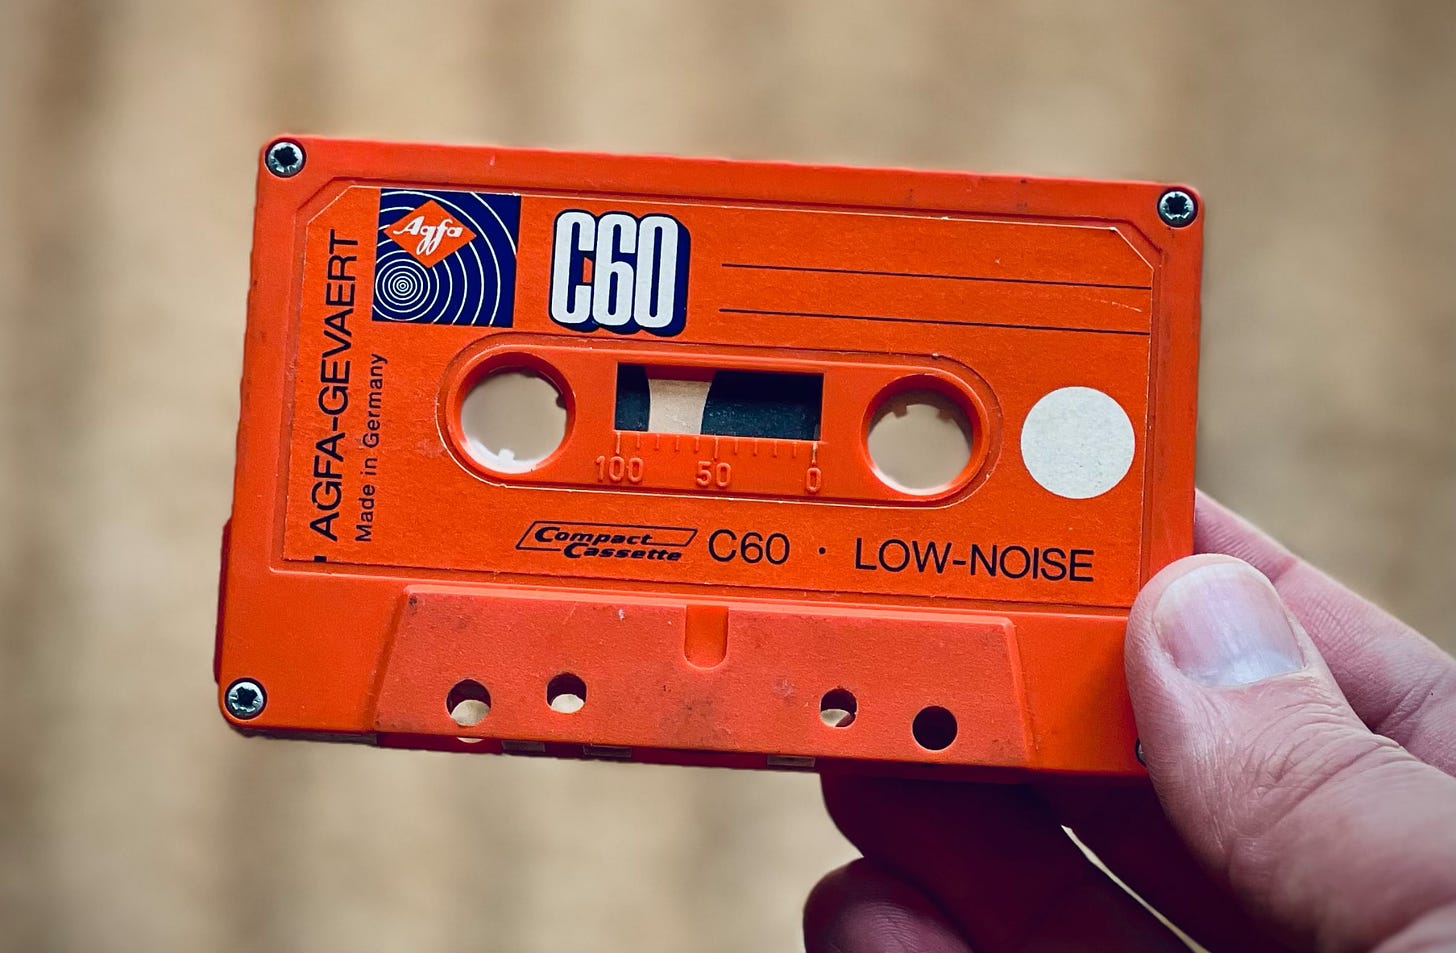 An orange cassette being held up, it's a C6 Agfa cassette.